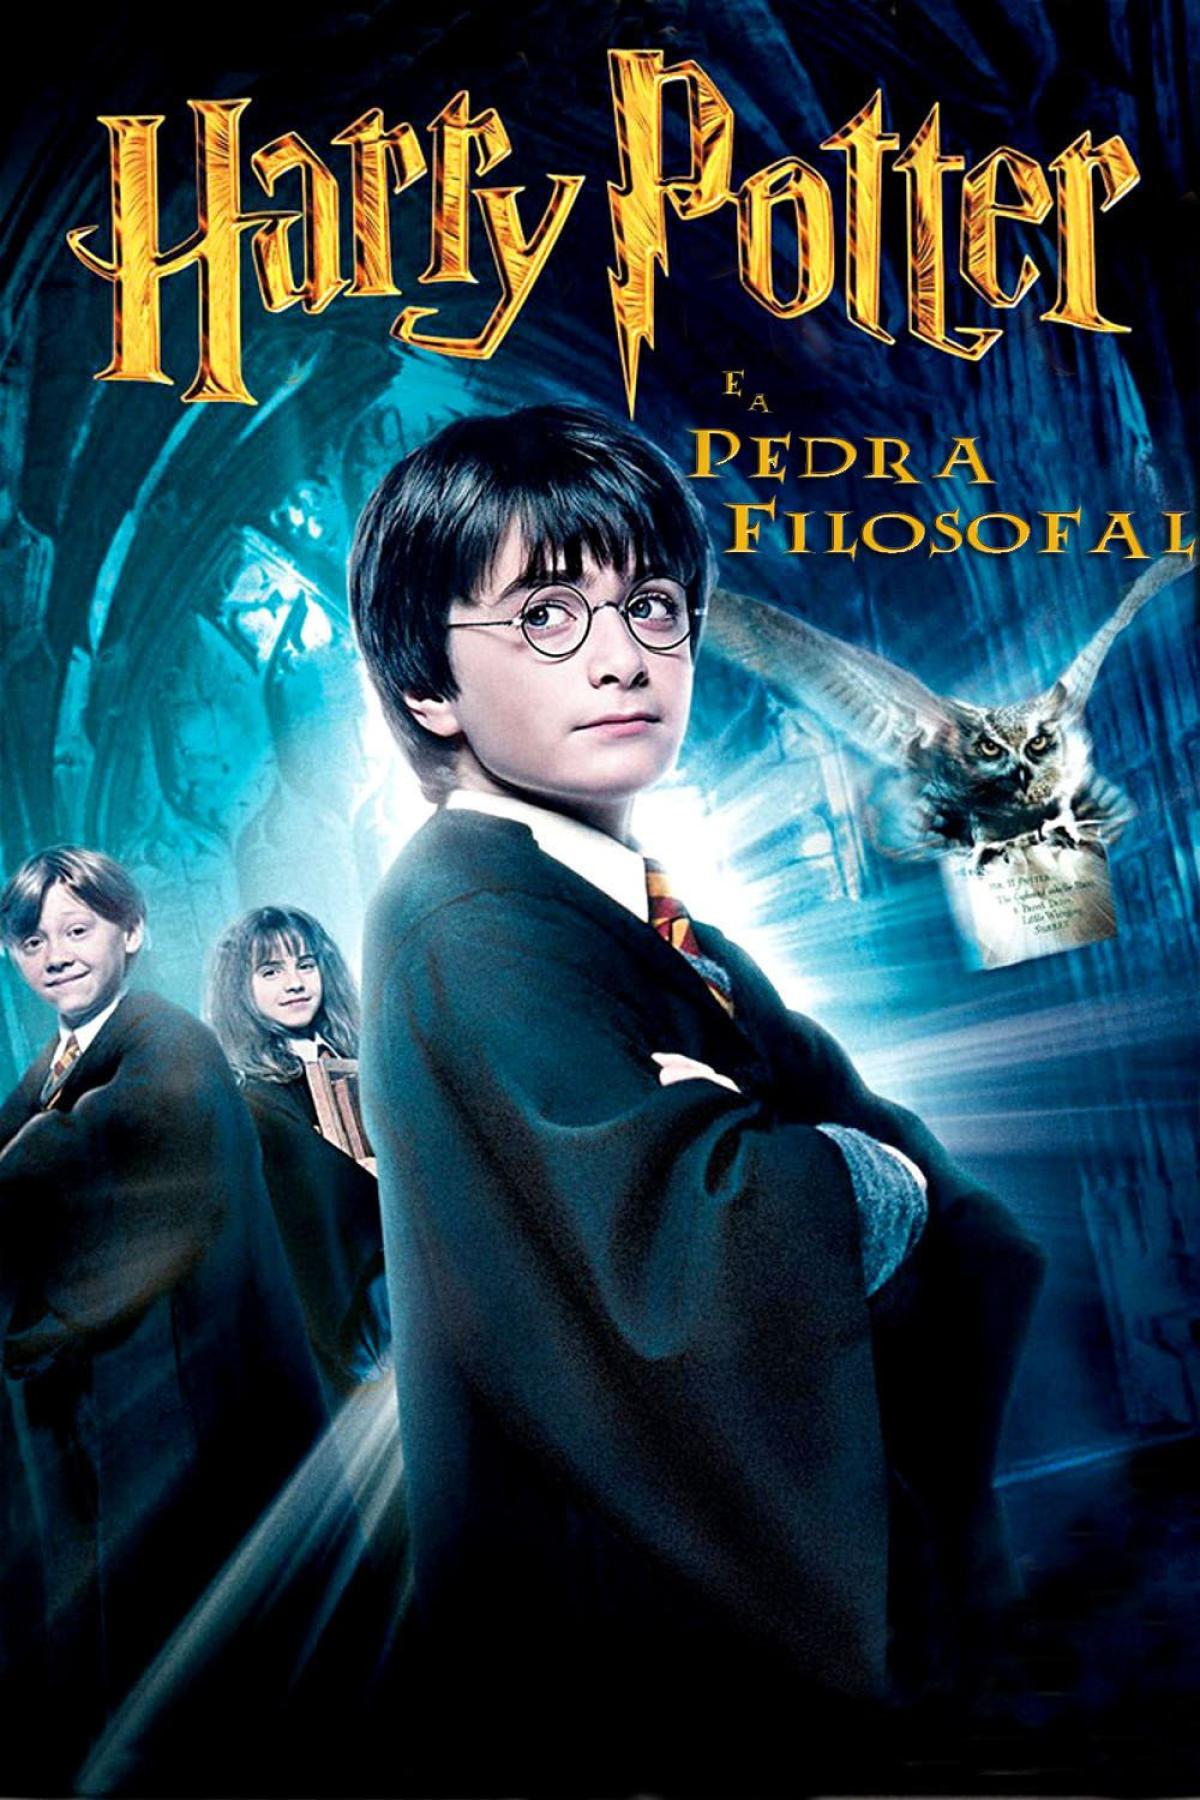 Orden correcto para todas las películas del Universo Harry Potter | Hobbyconsolas